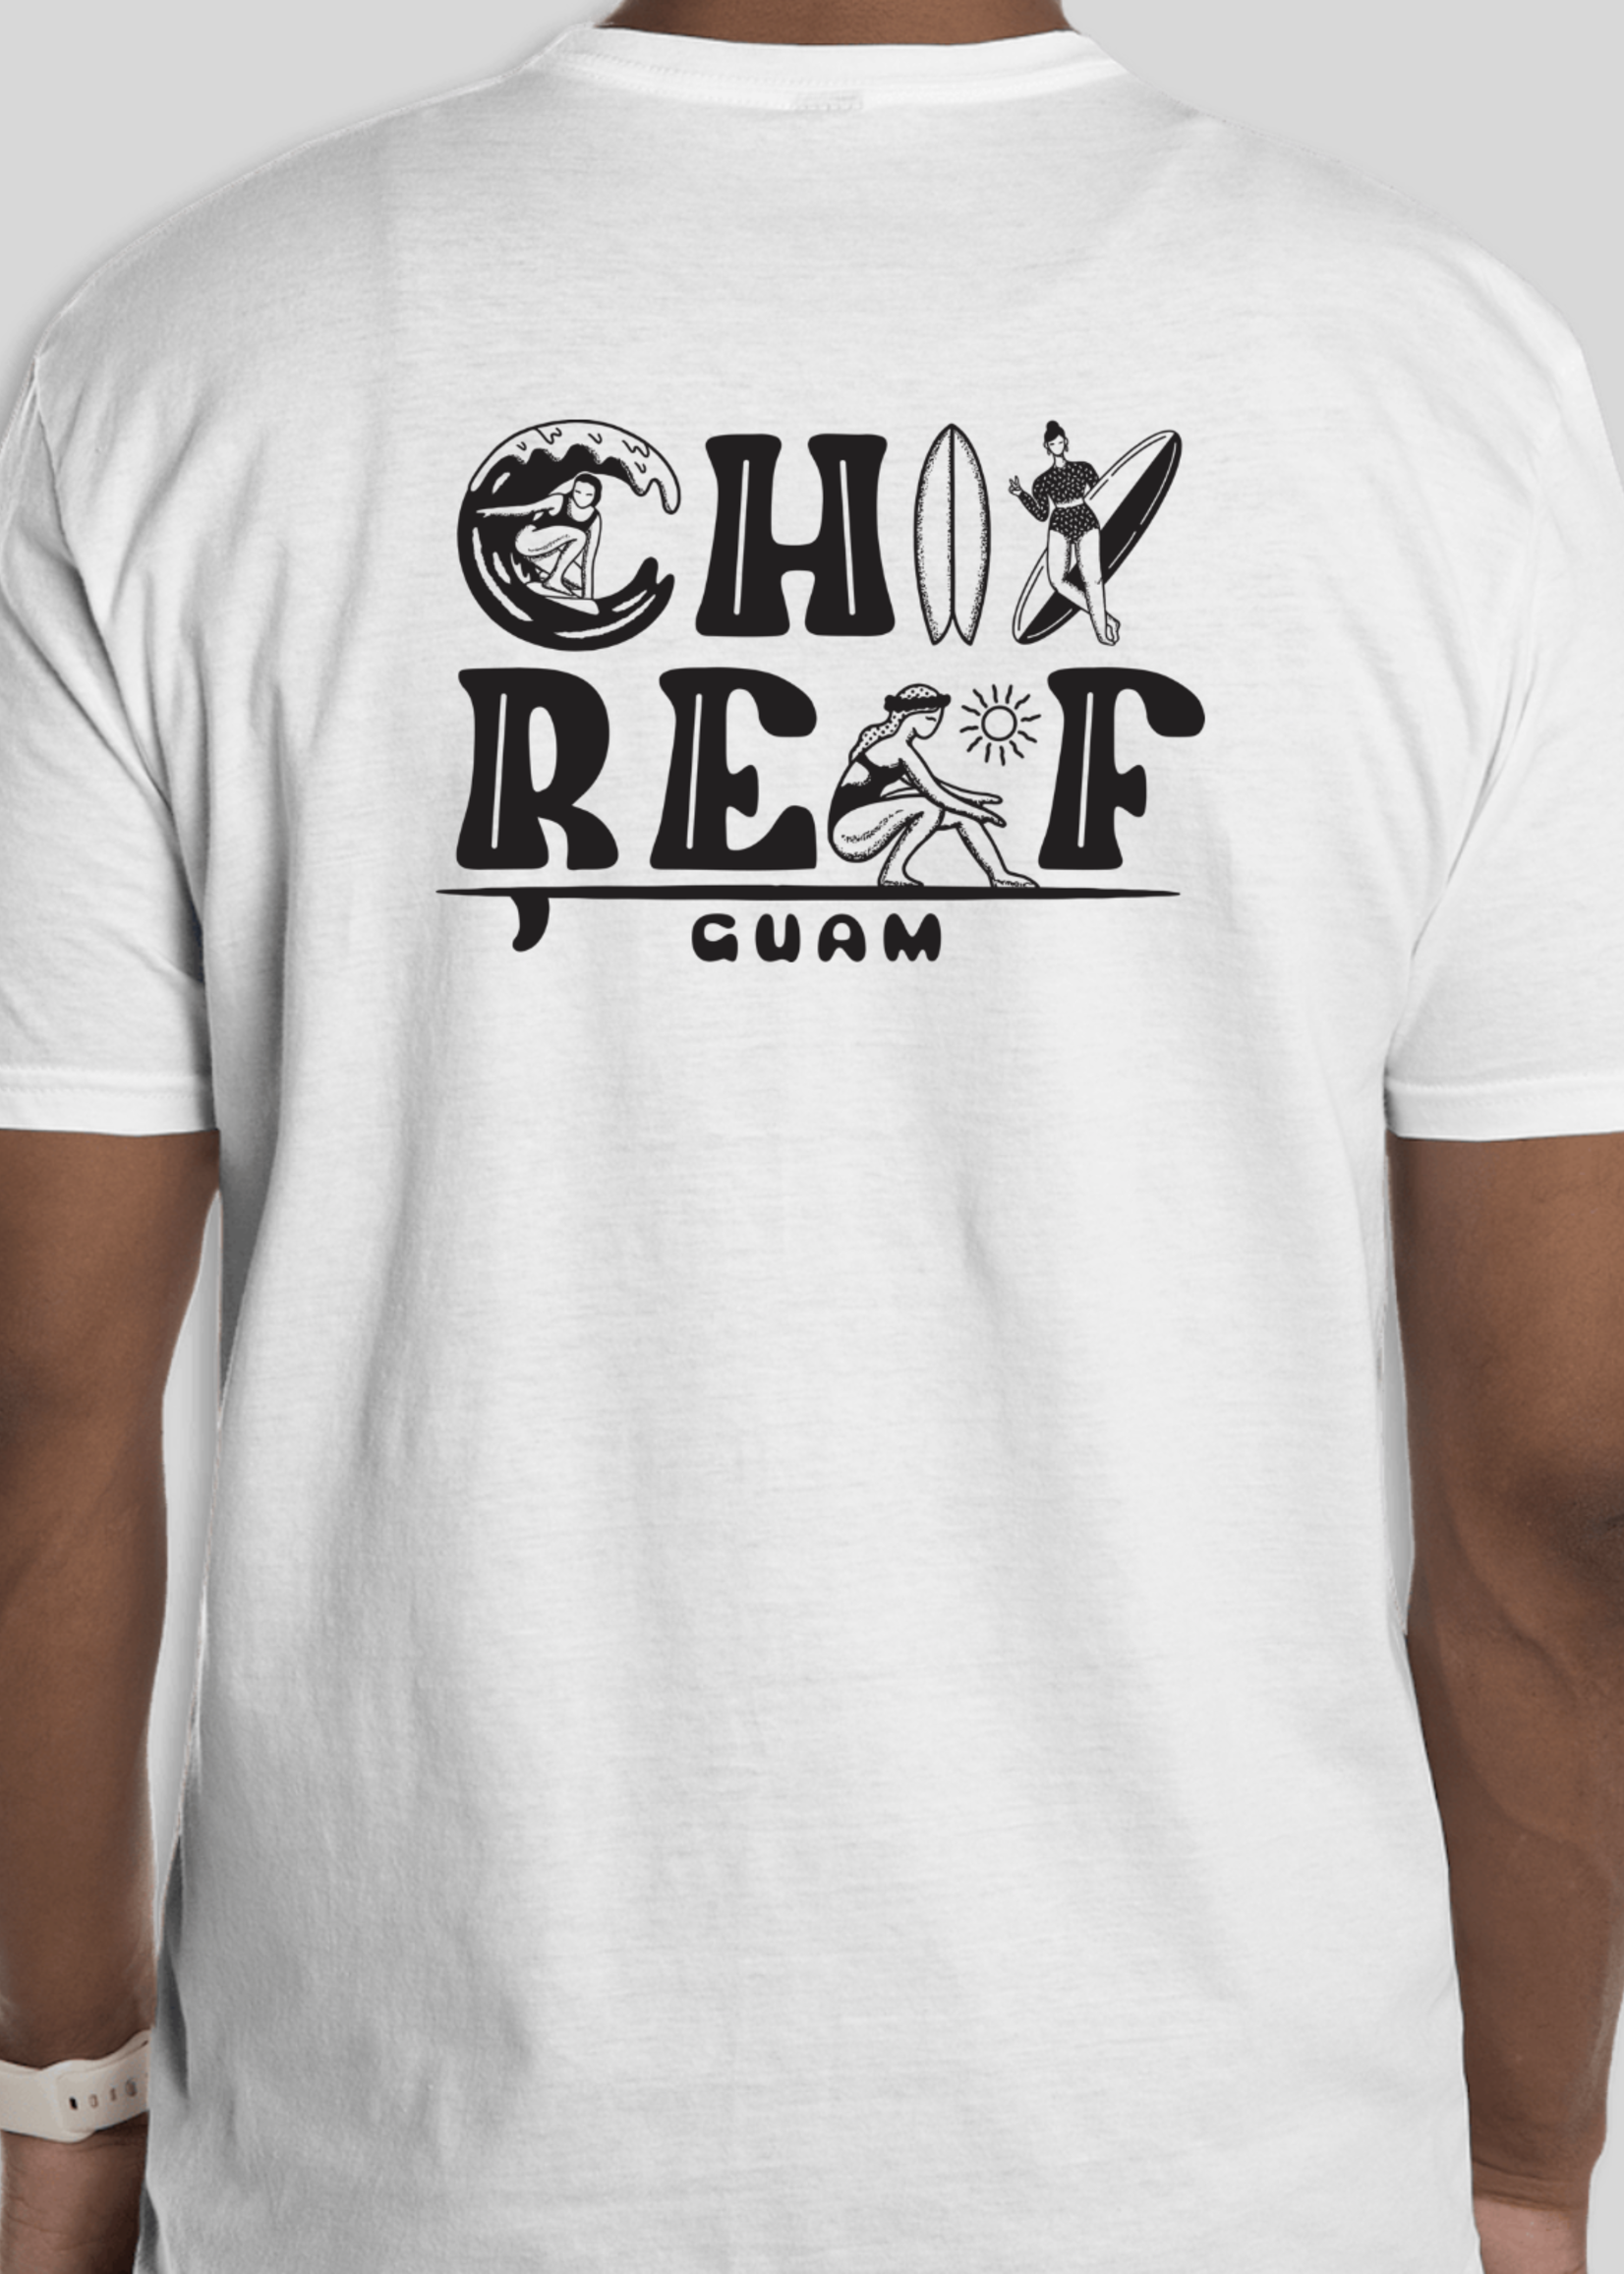 CHIXREEF Chix Reef Guam Tee